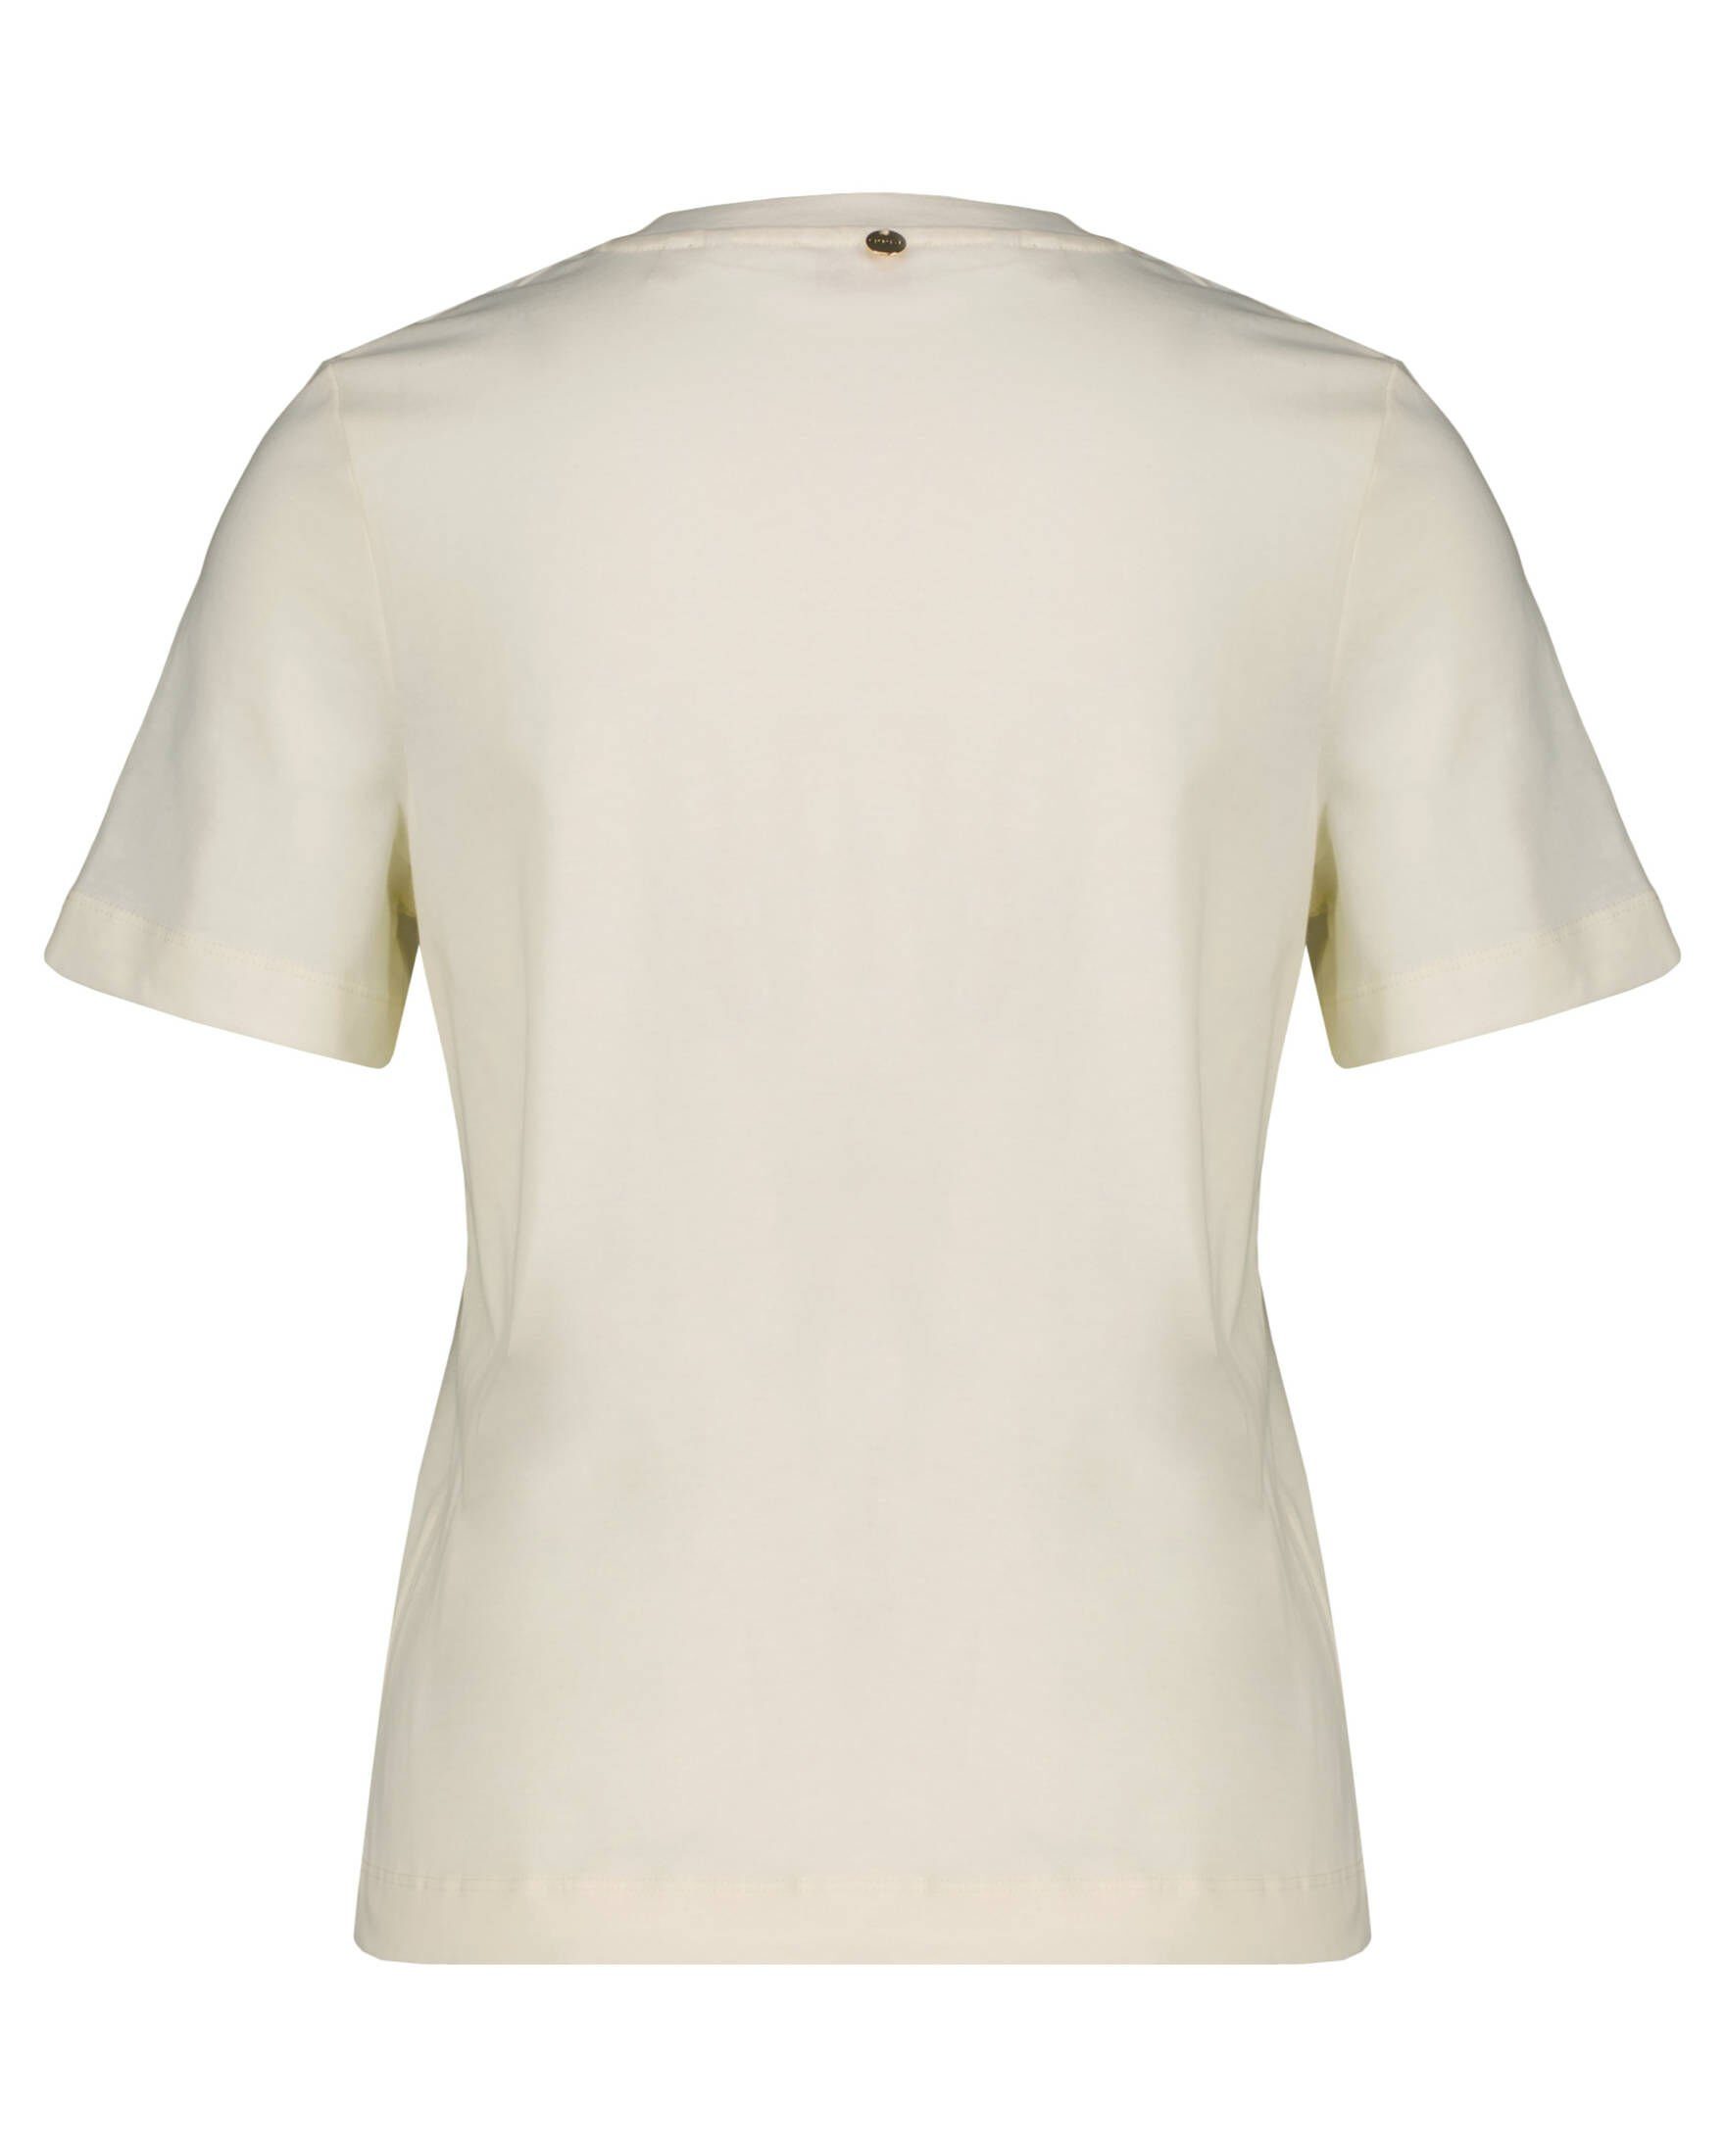 Rich & Royal T-Shirt Damen (1-tlg) T-Shirt BENE TUTTO